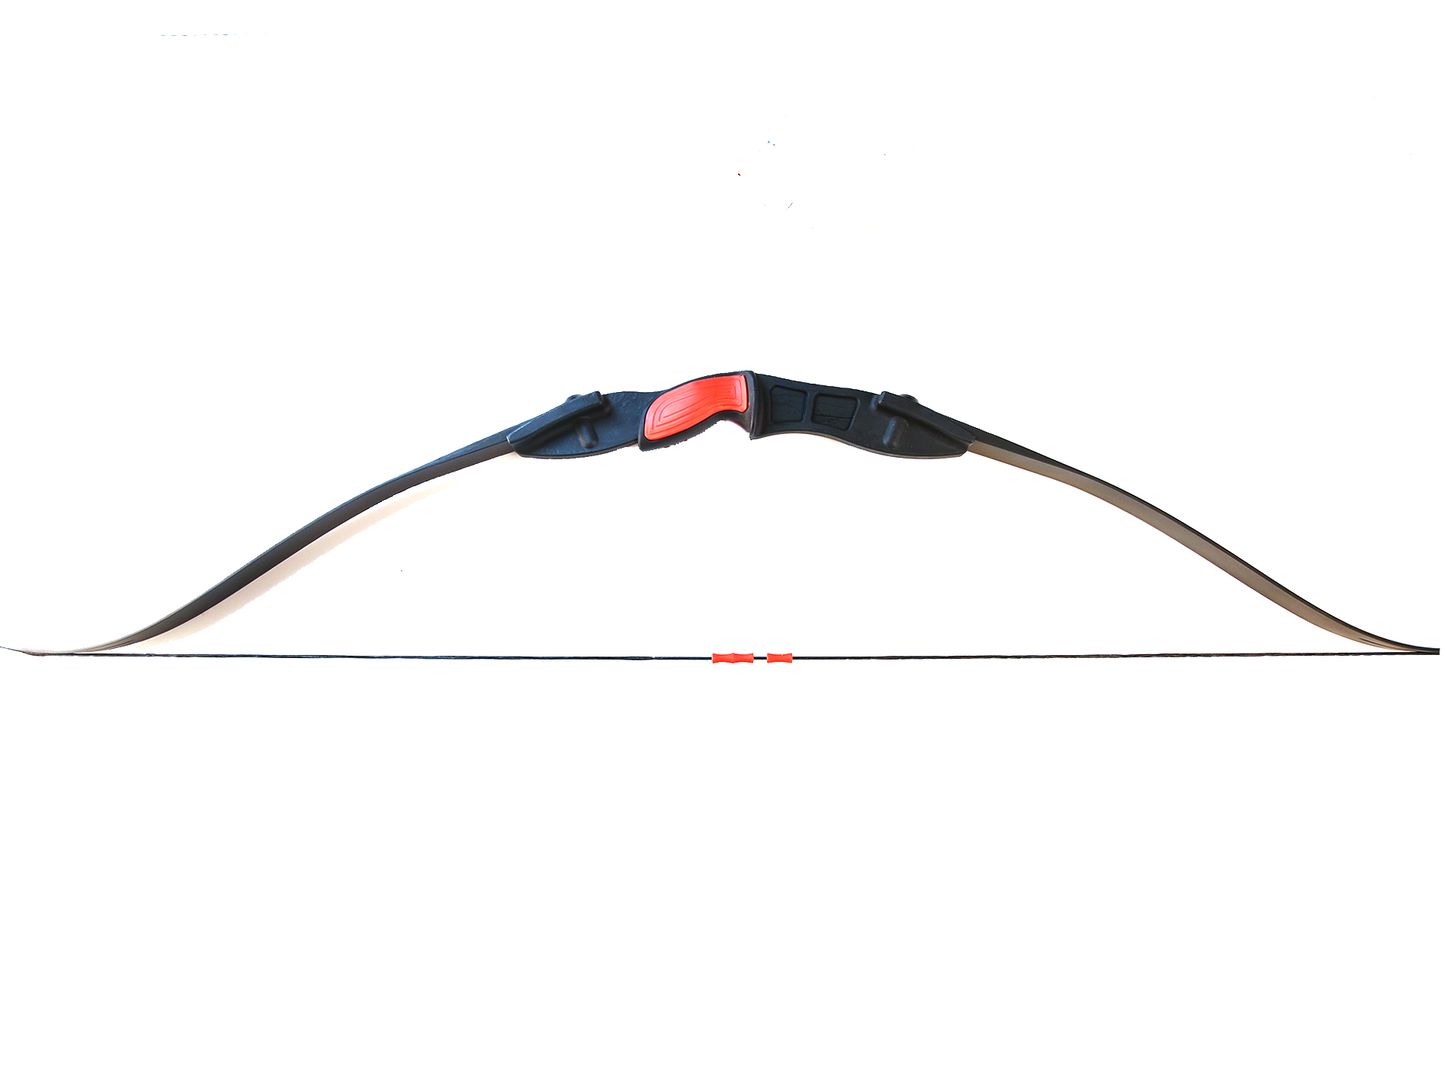 Adult bow(22lbs) + Foam Tip Arrow + Arm Guard Combo